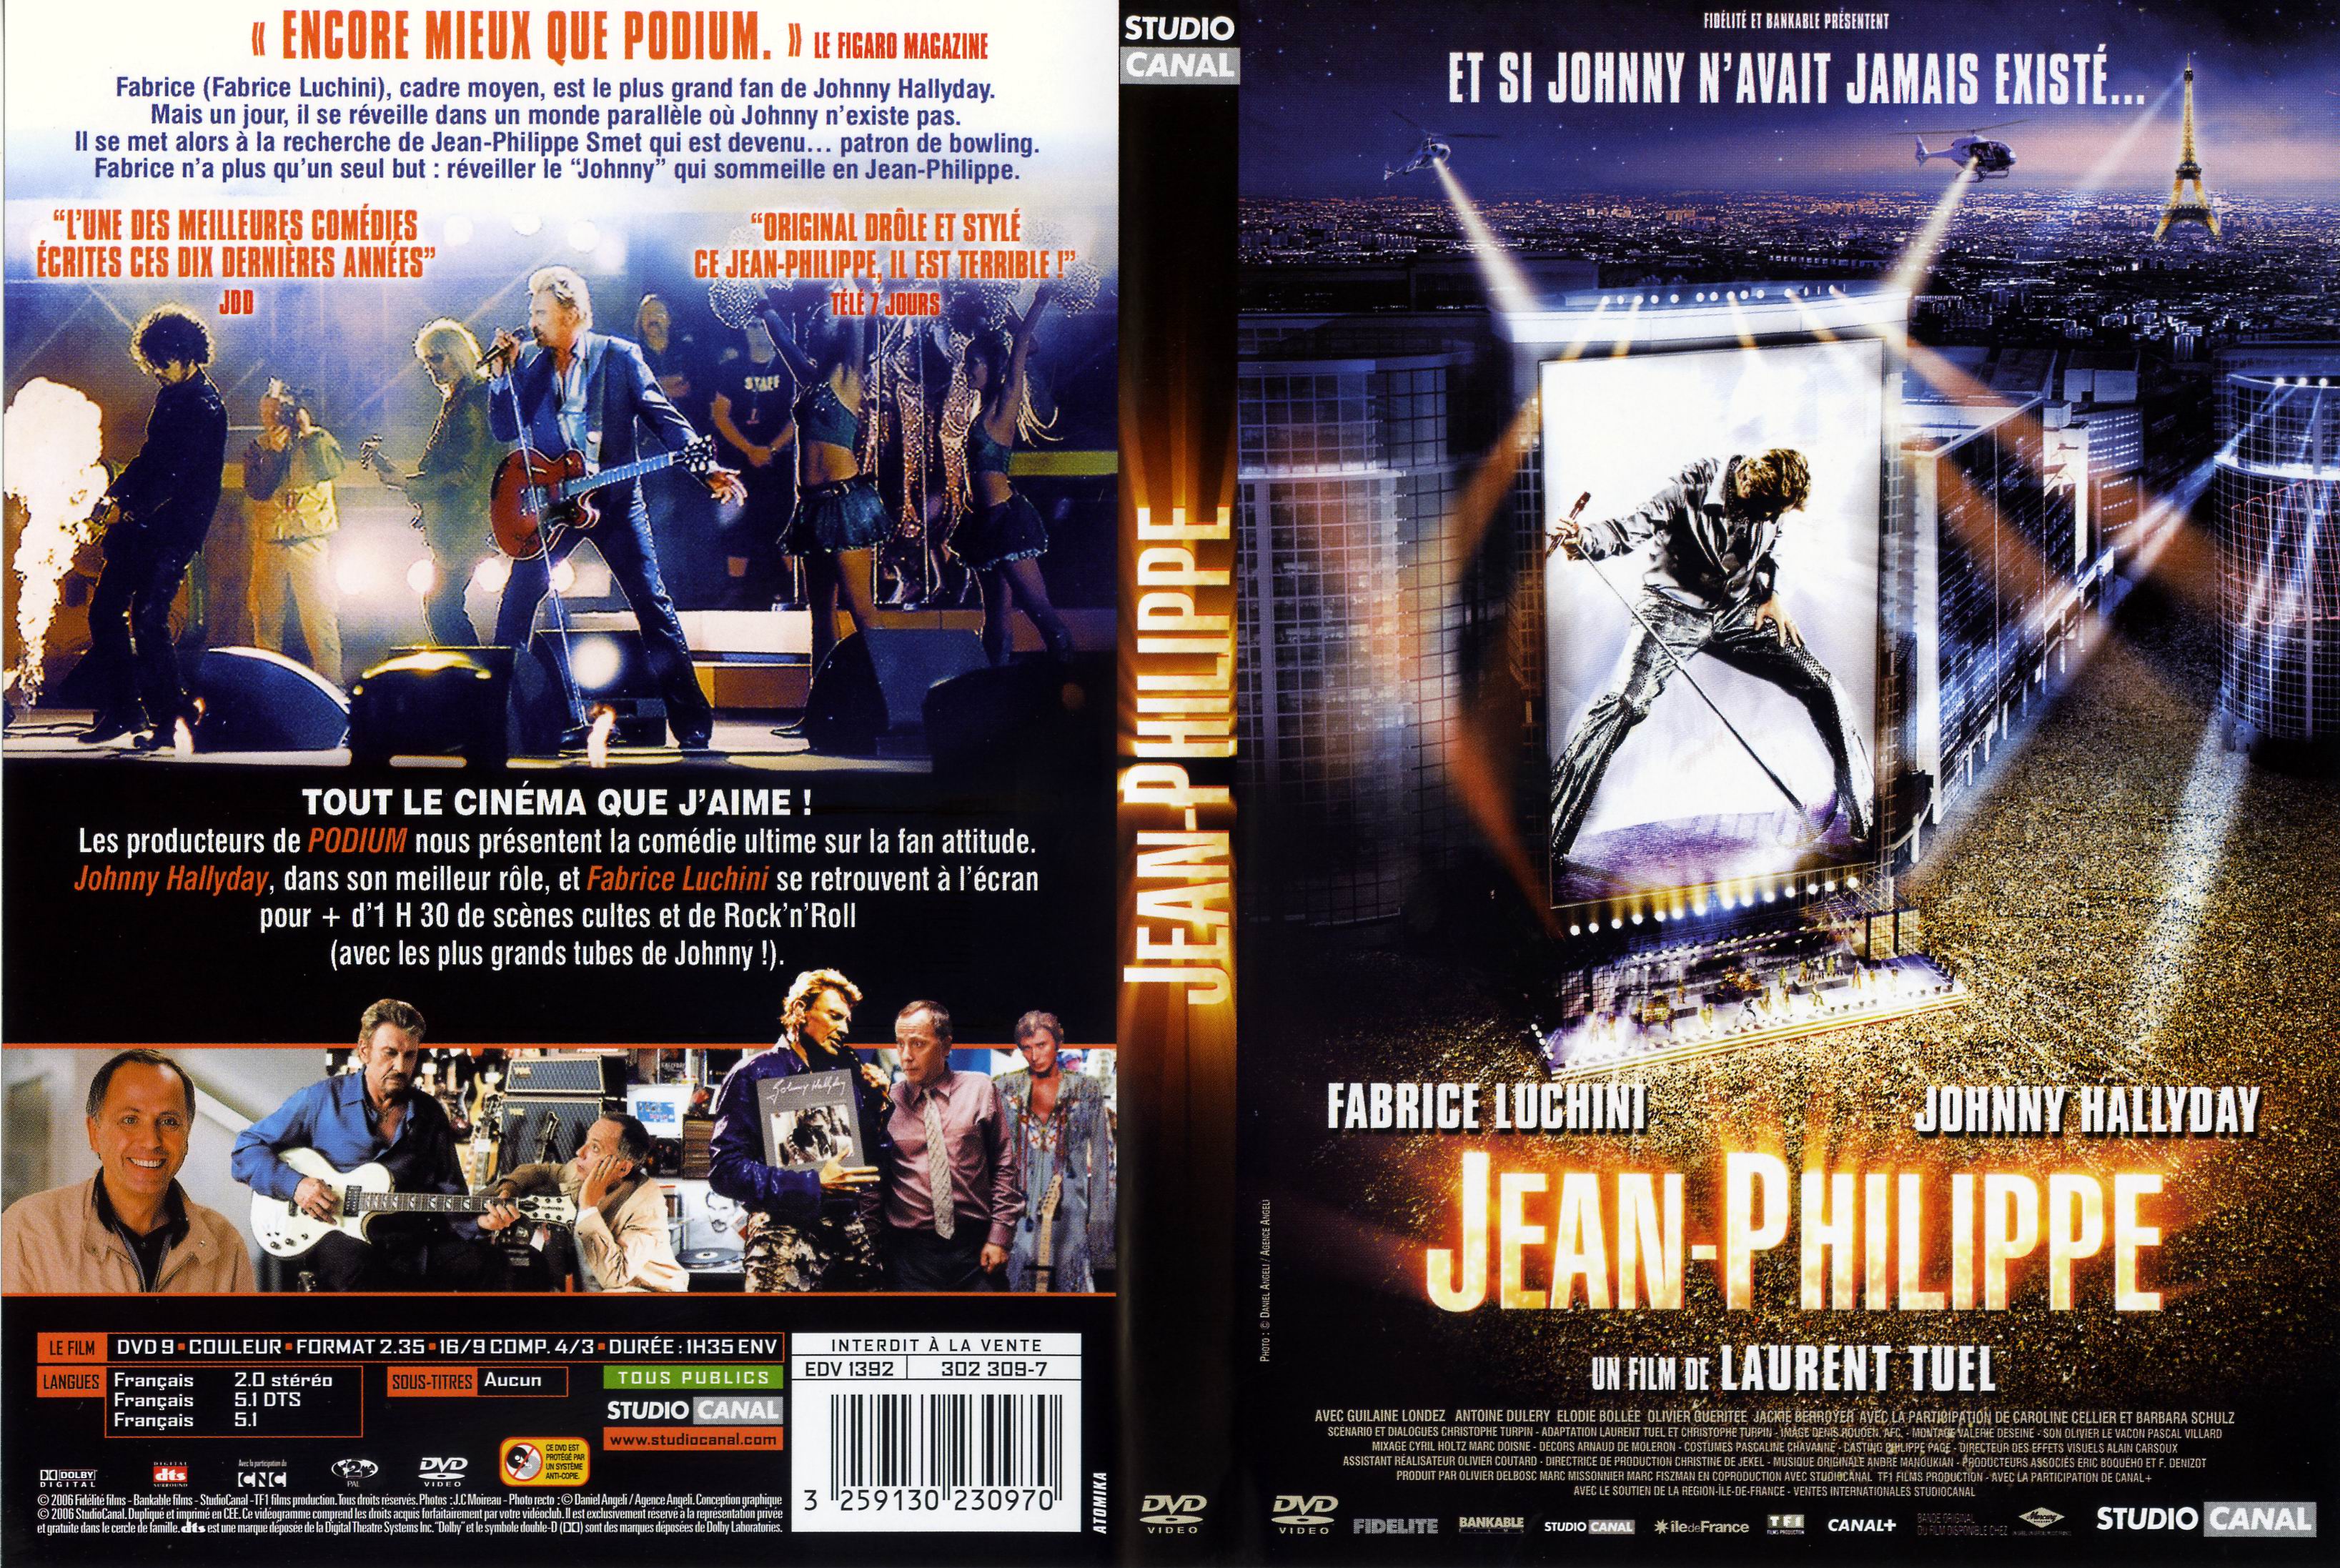 Jaquette DVD Jean-Philippe v2